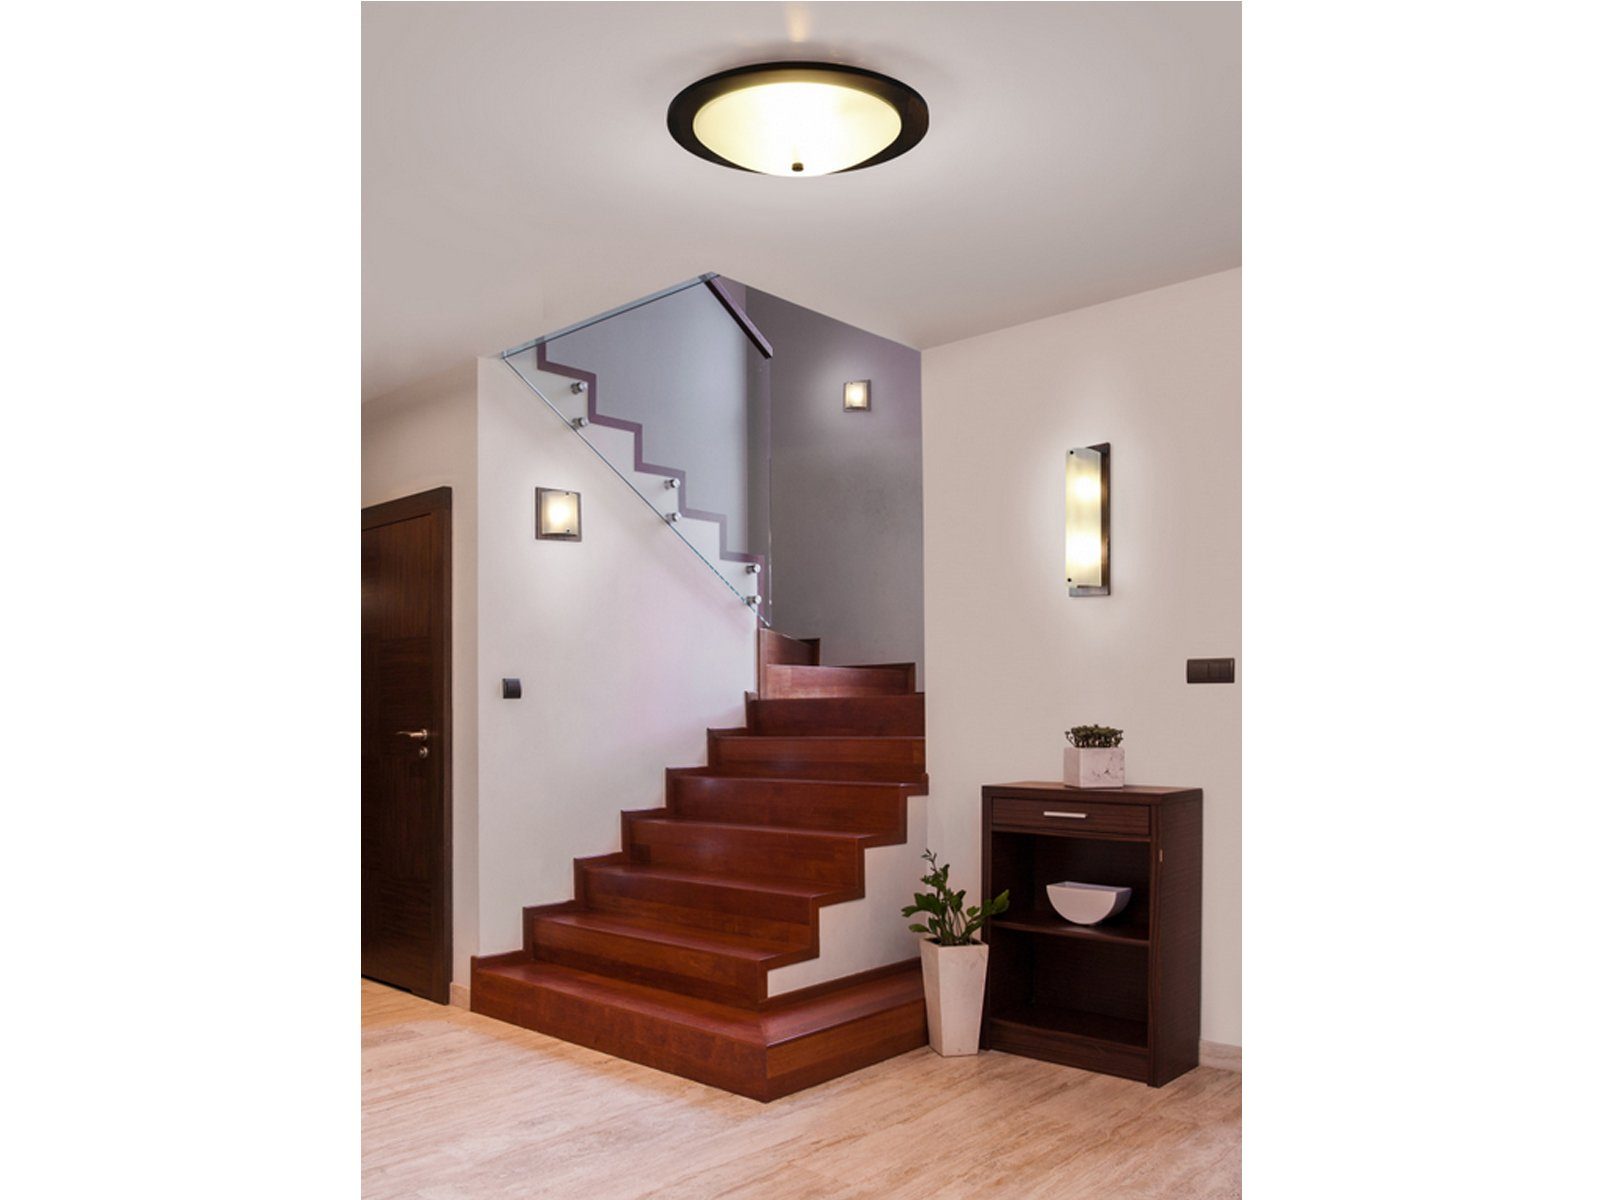 Braun/ LED Treppenaufgang, Treppenhaus rustikal Holz Dimmfunktion, Warmweiß, & Wandleuchte, flache Ø25cm meineWunschleuchte Weiß wechselbar, LED Holz-lampe innen